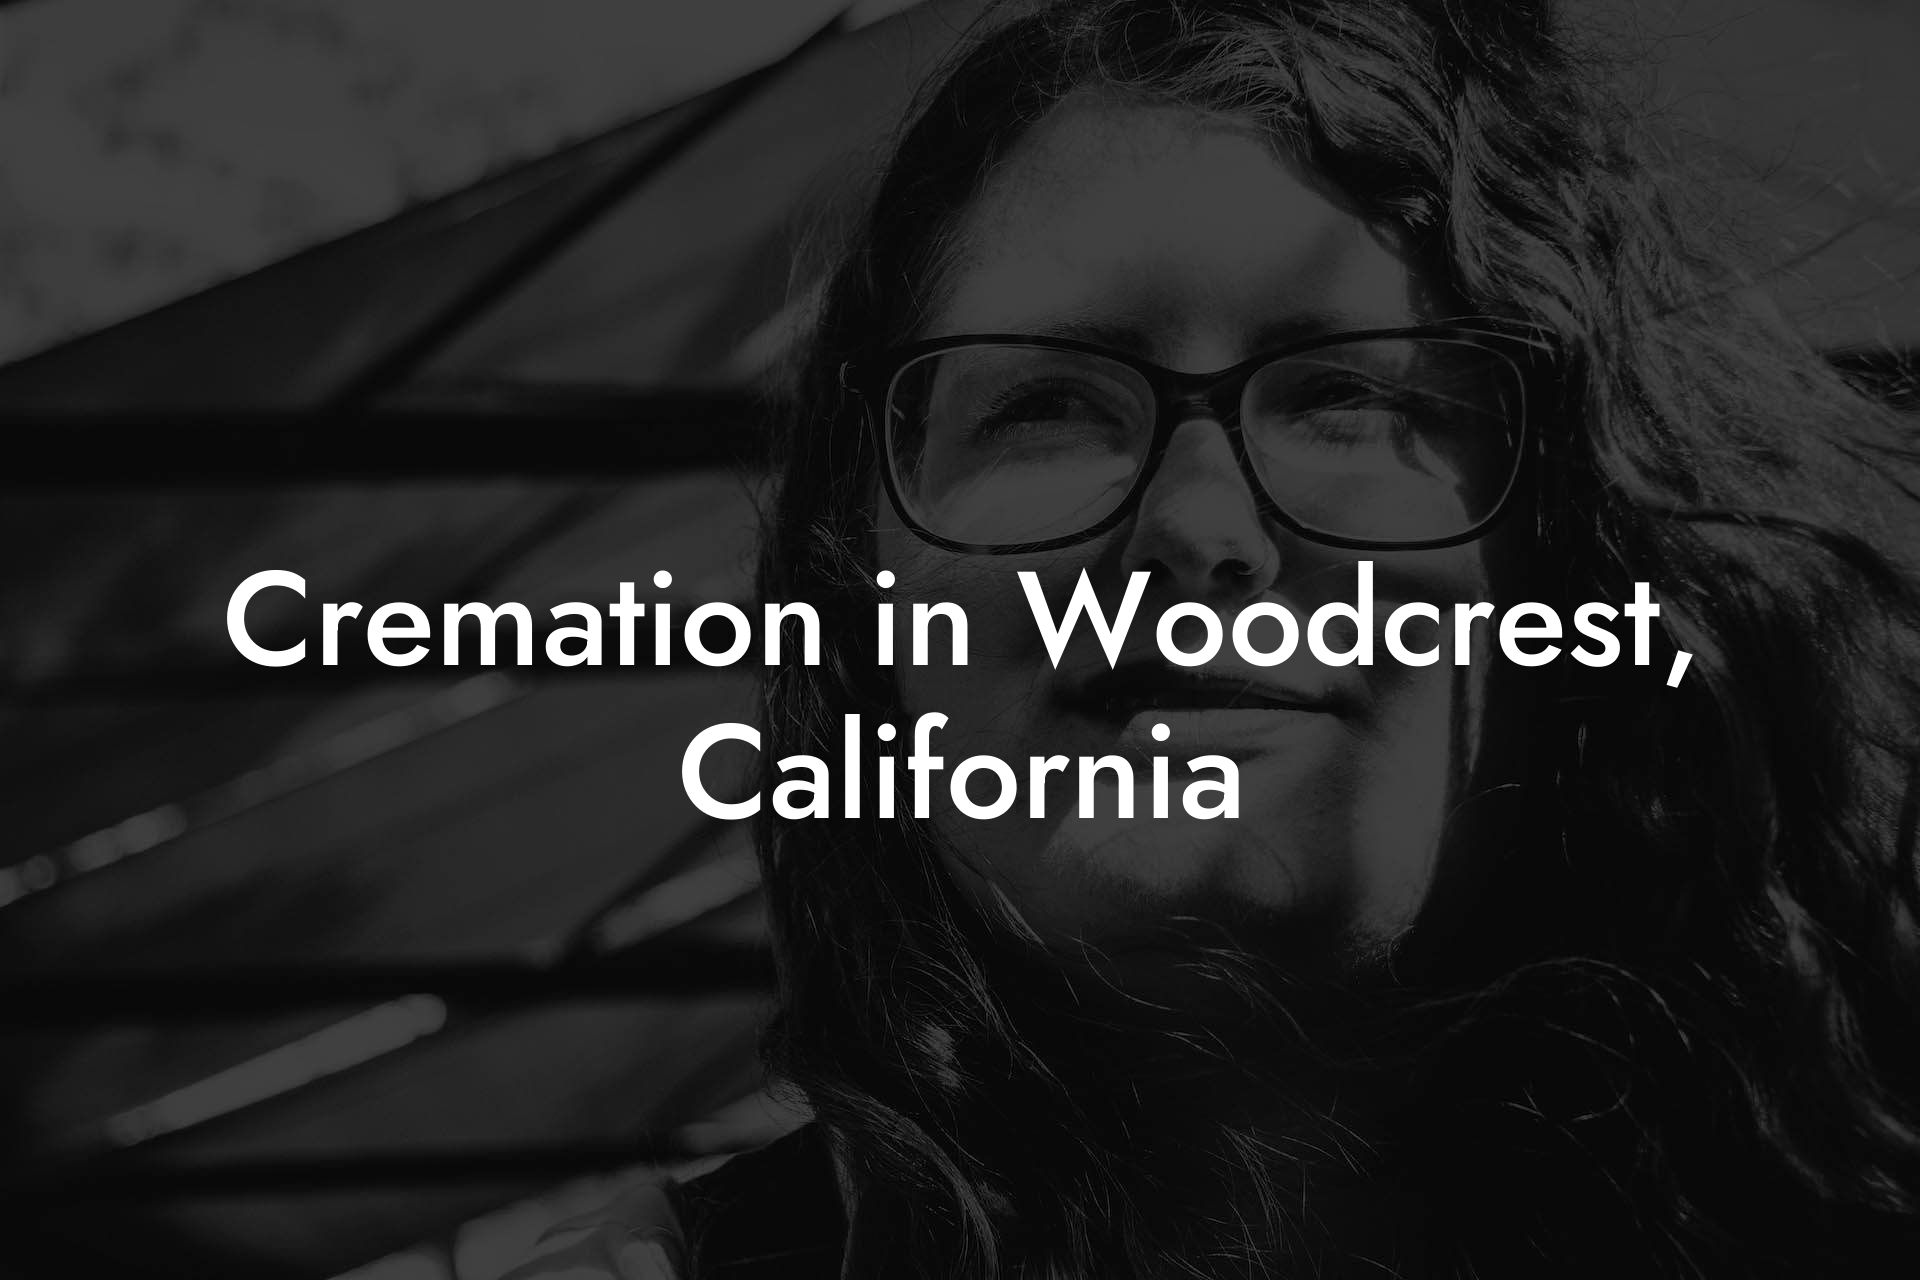 Cremation in Woodcrest, California